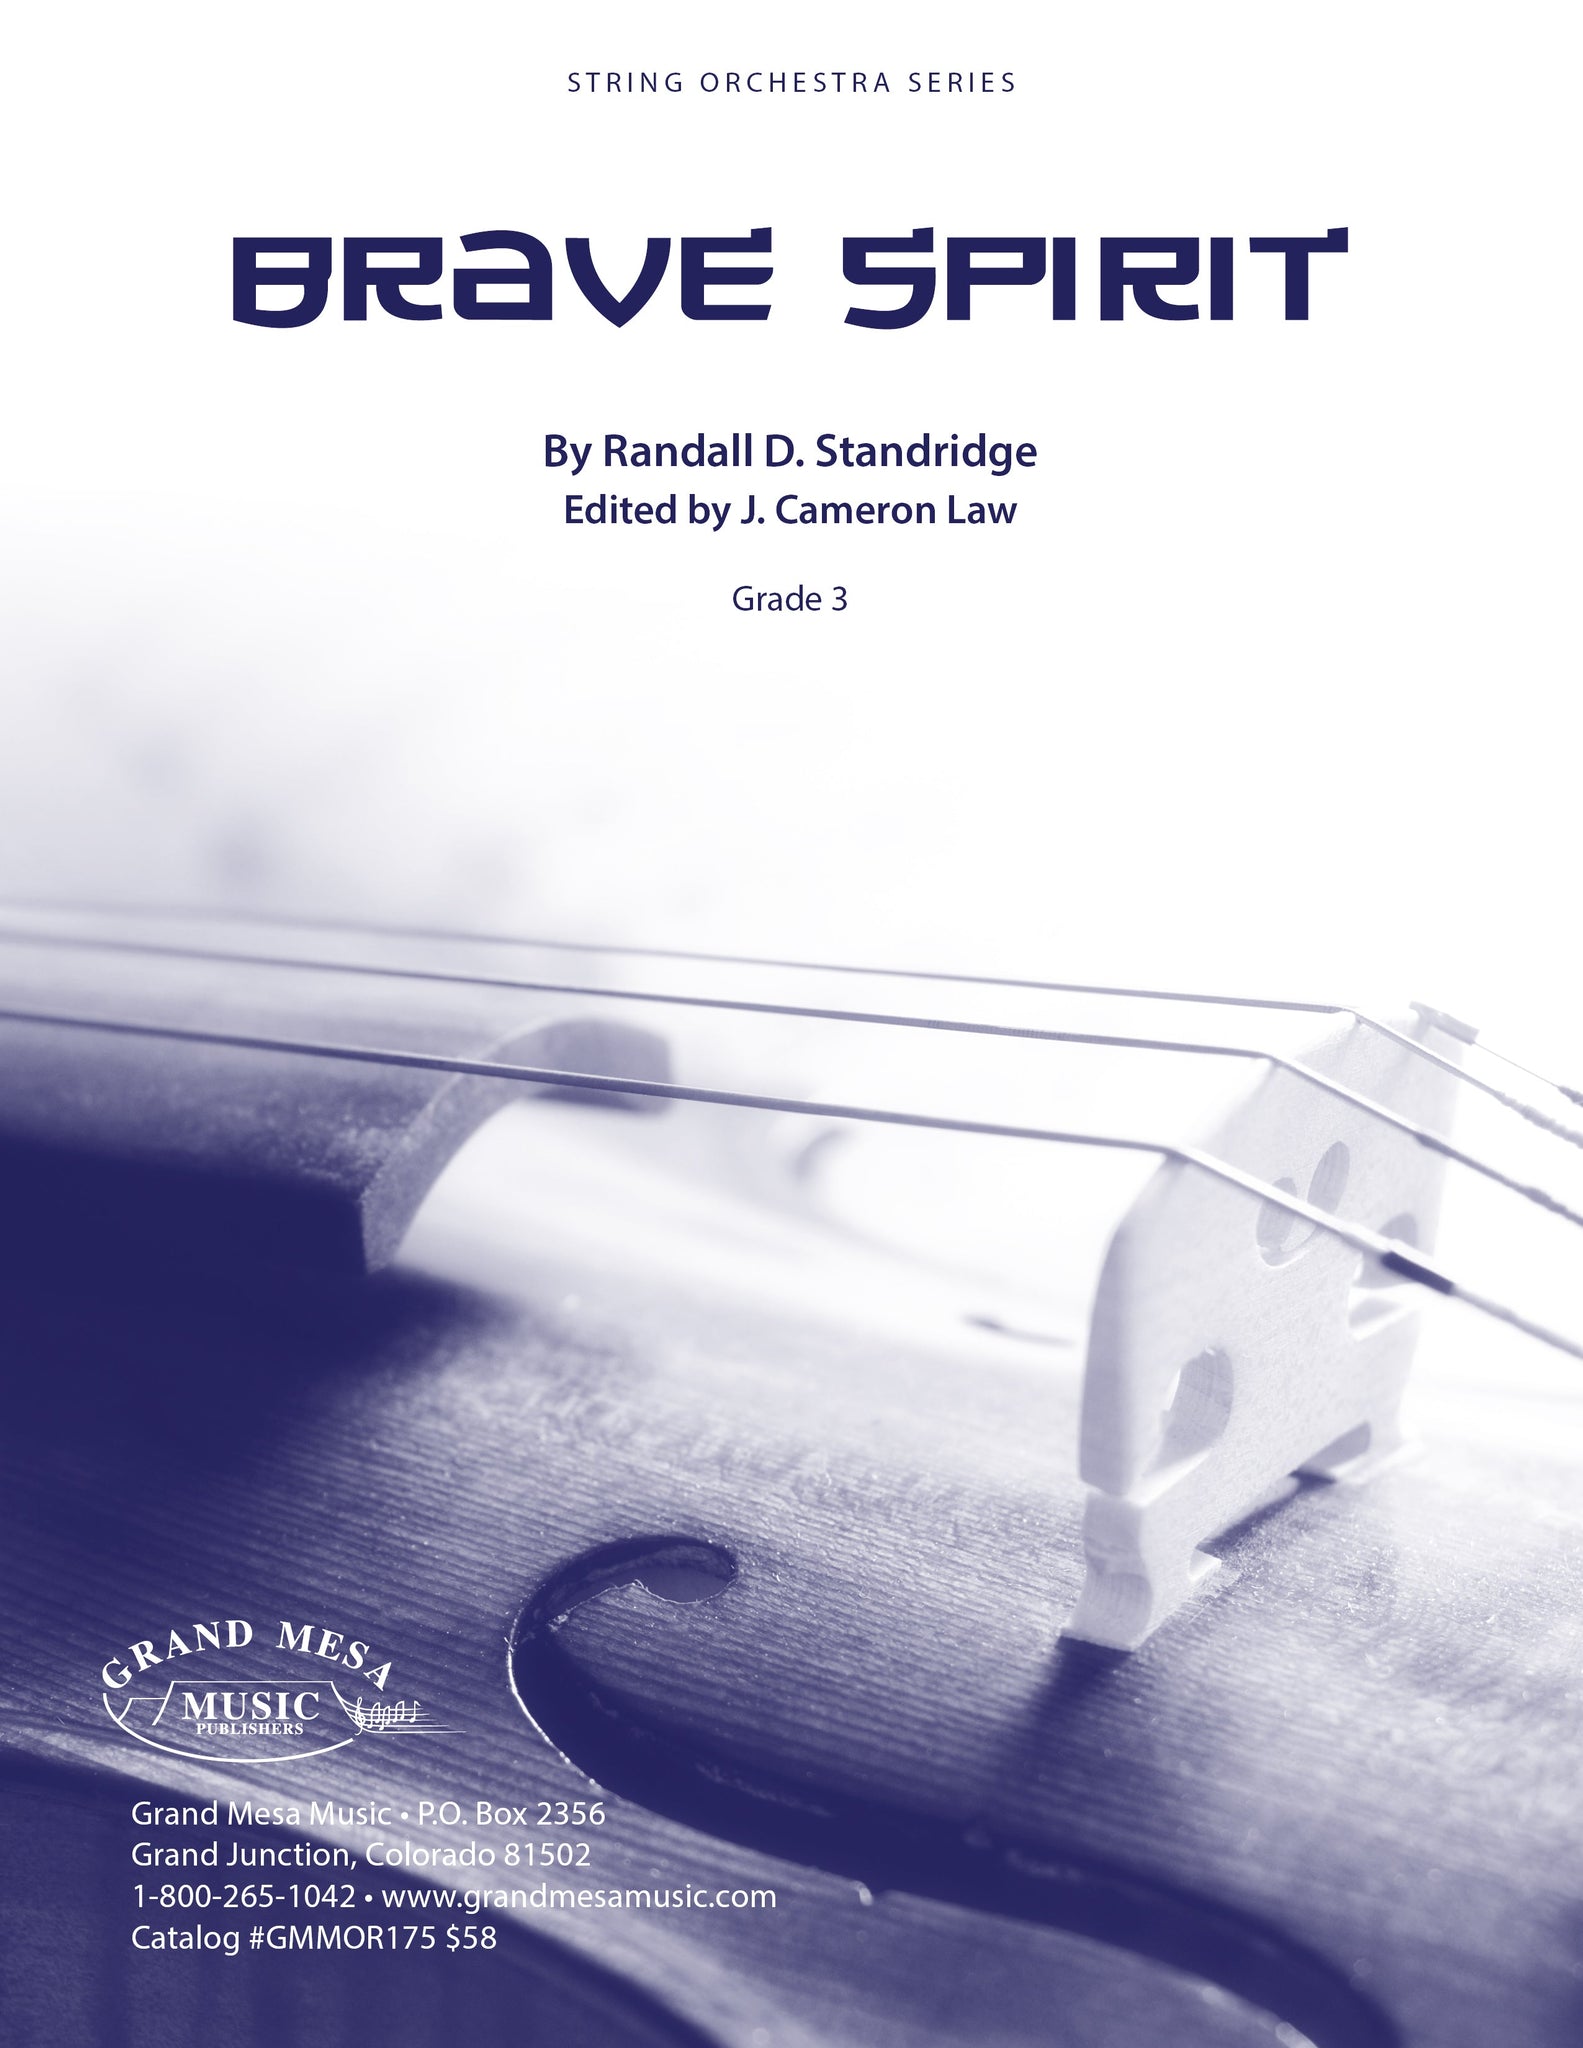 Strings sheet music cover of Brave Spirit, composed by Randall D. Standridge.